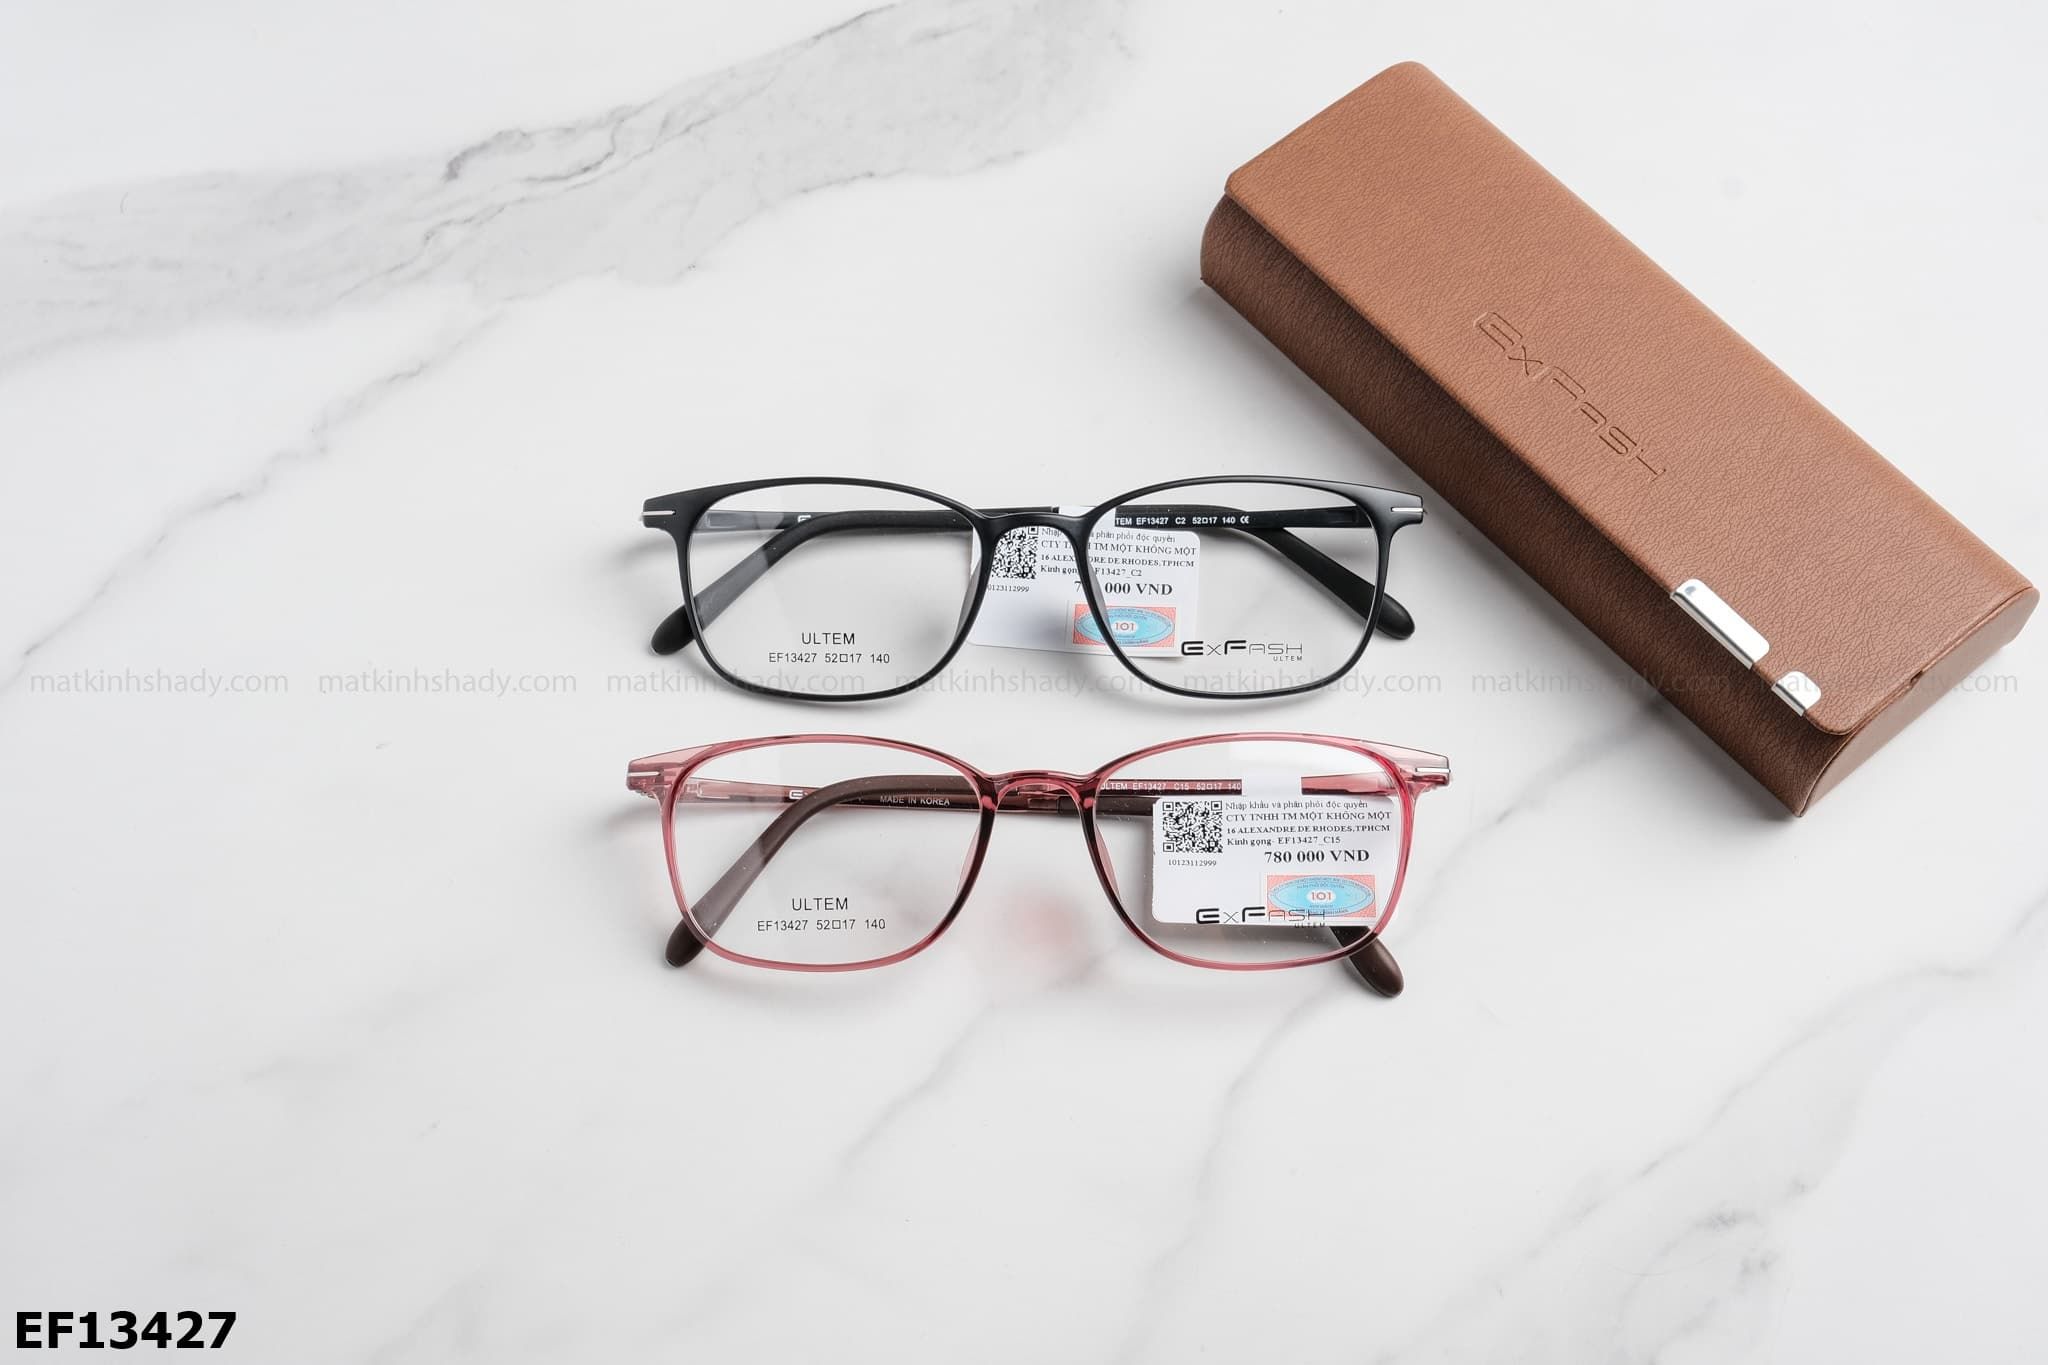  Exfash Eyewear - Glasses - EF13427 